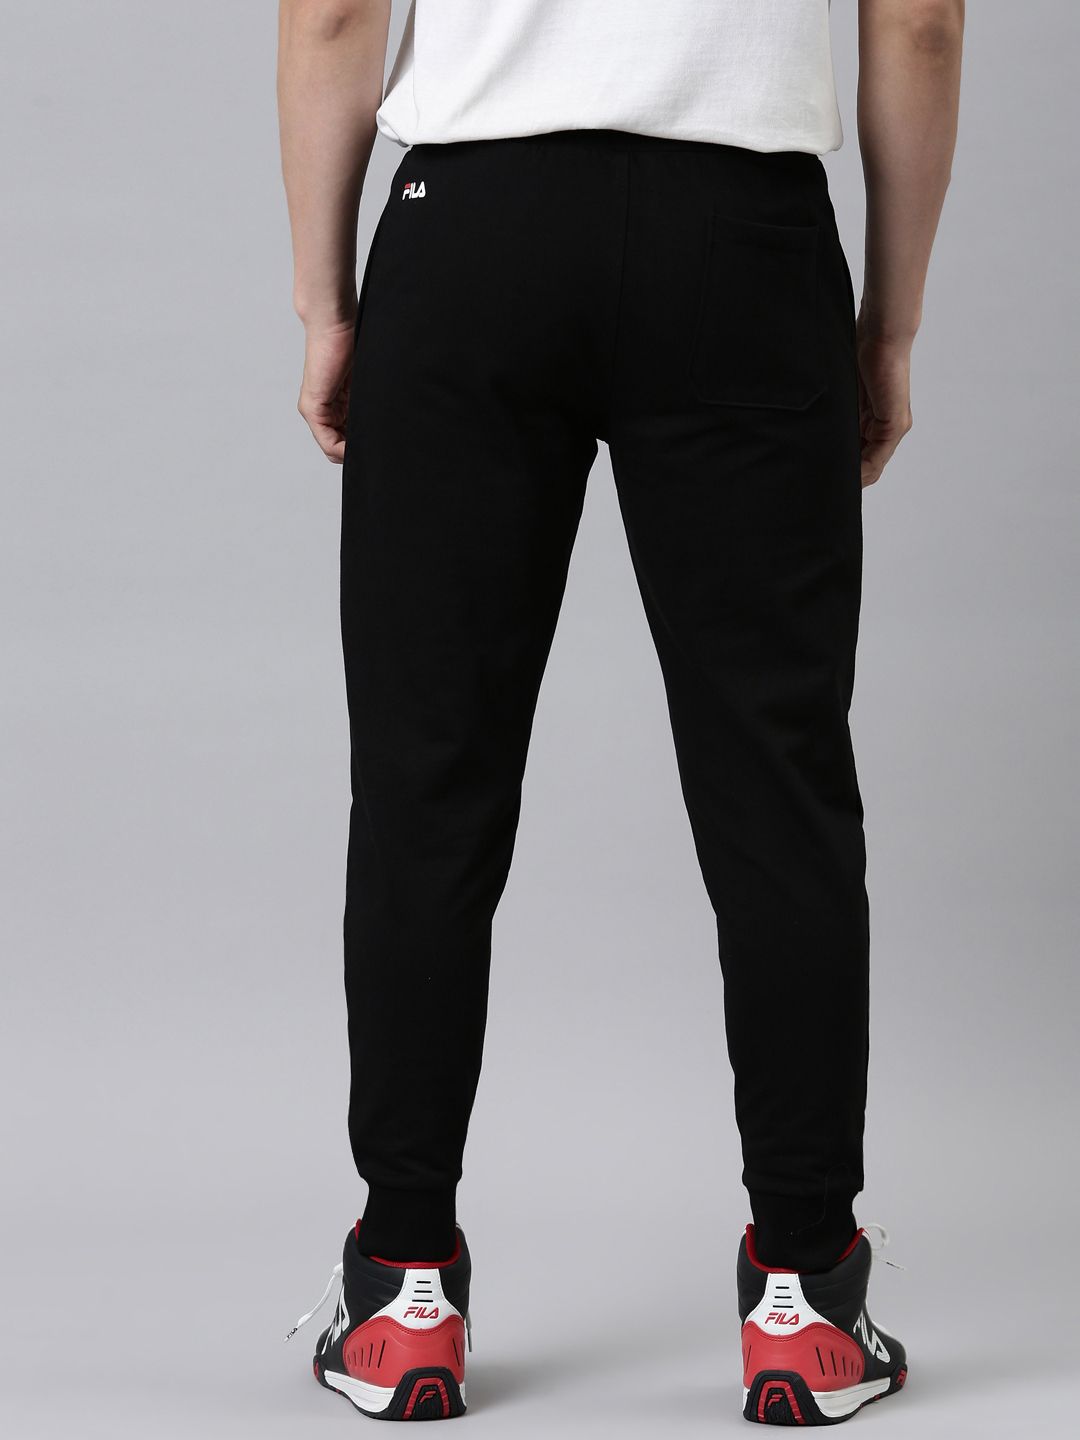 NATE - Black sport pants